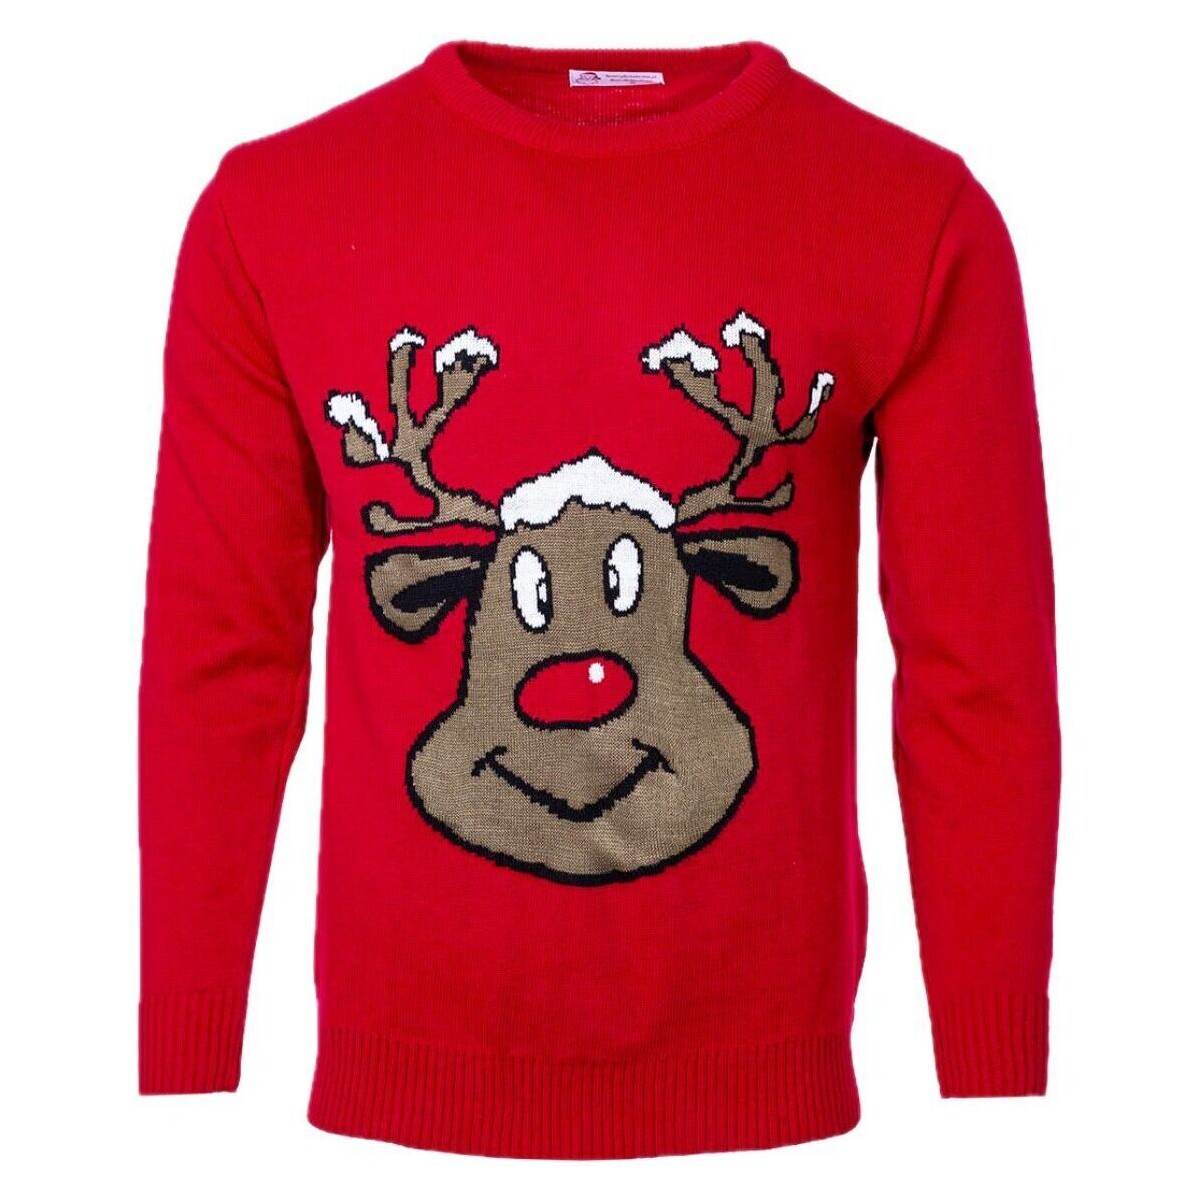 Textil Svetry Wayfarer Vánoční svetr se sobem Reindeer červený Červená